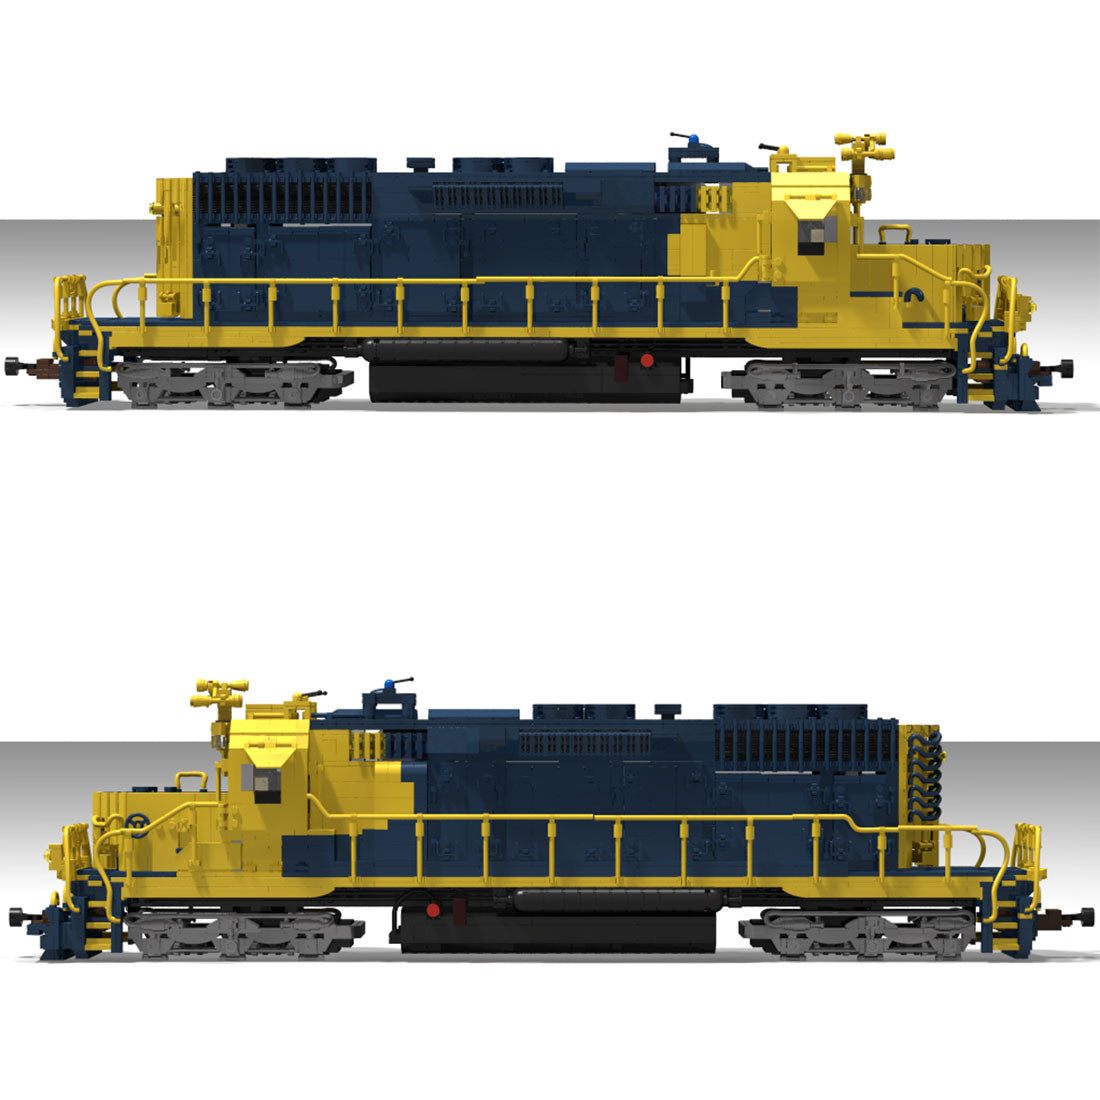 ATSF 5134 Diesel Locomotive Model Building Blocks Set 3573PCS